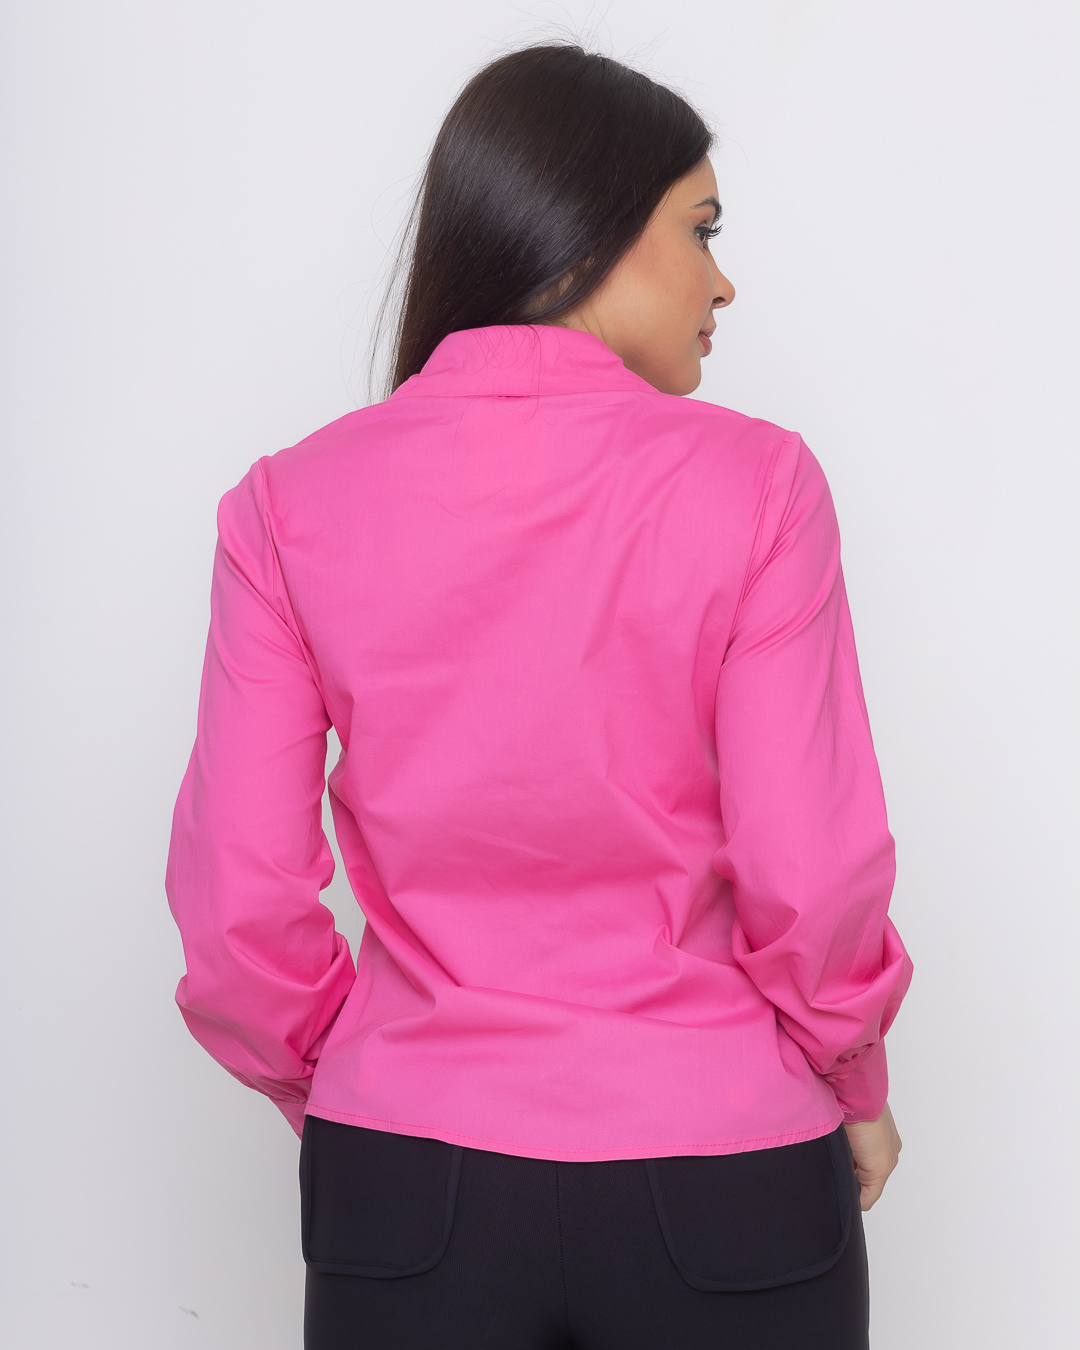 Dot Clothing - Pink Long Sleeve Dot Shirt - 1335ROSA